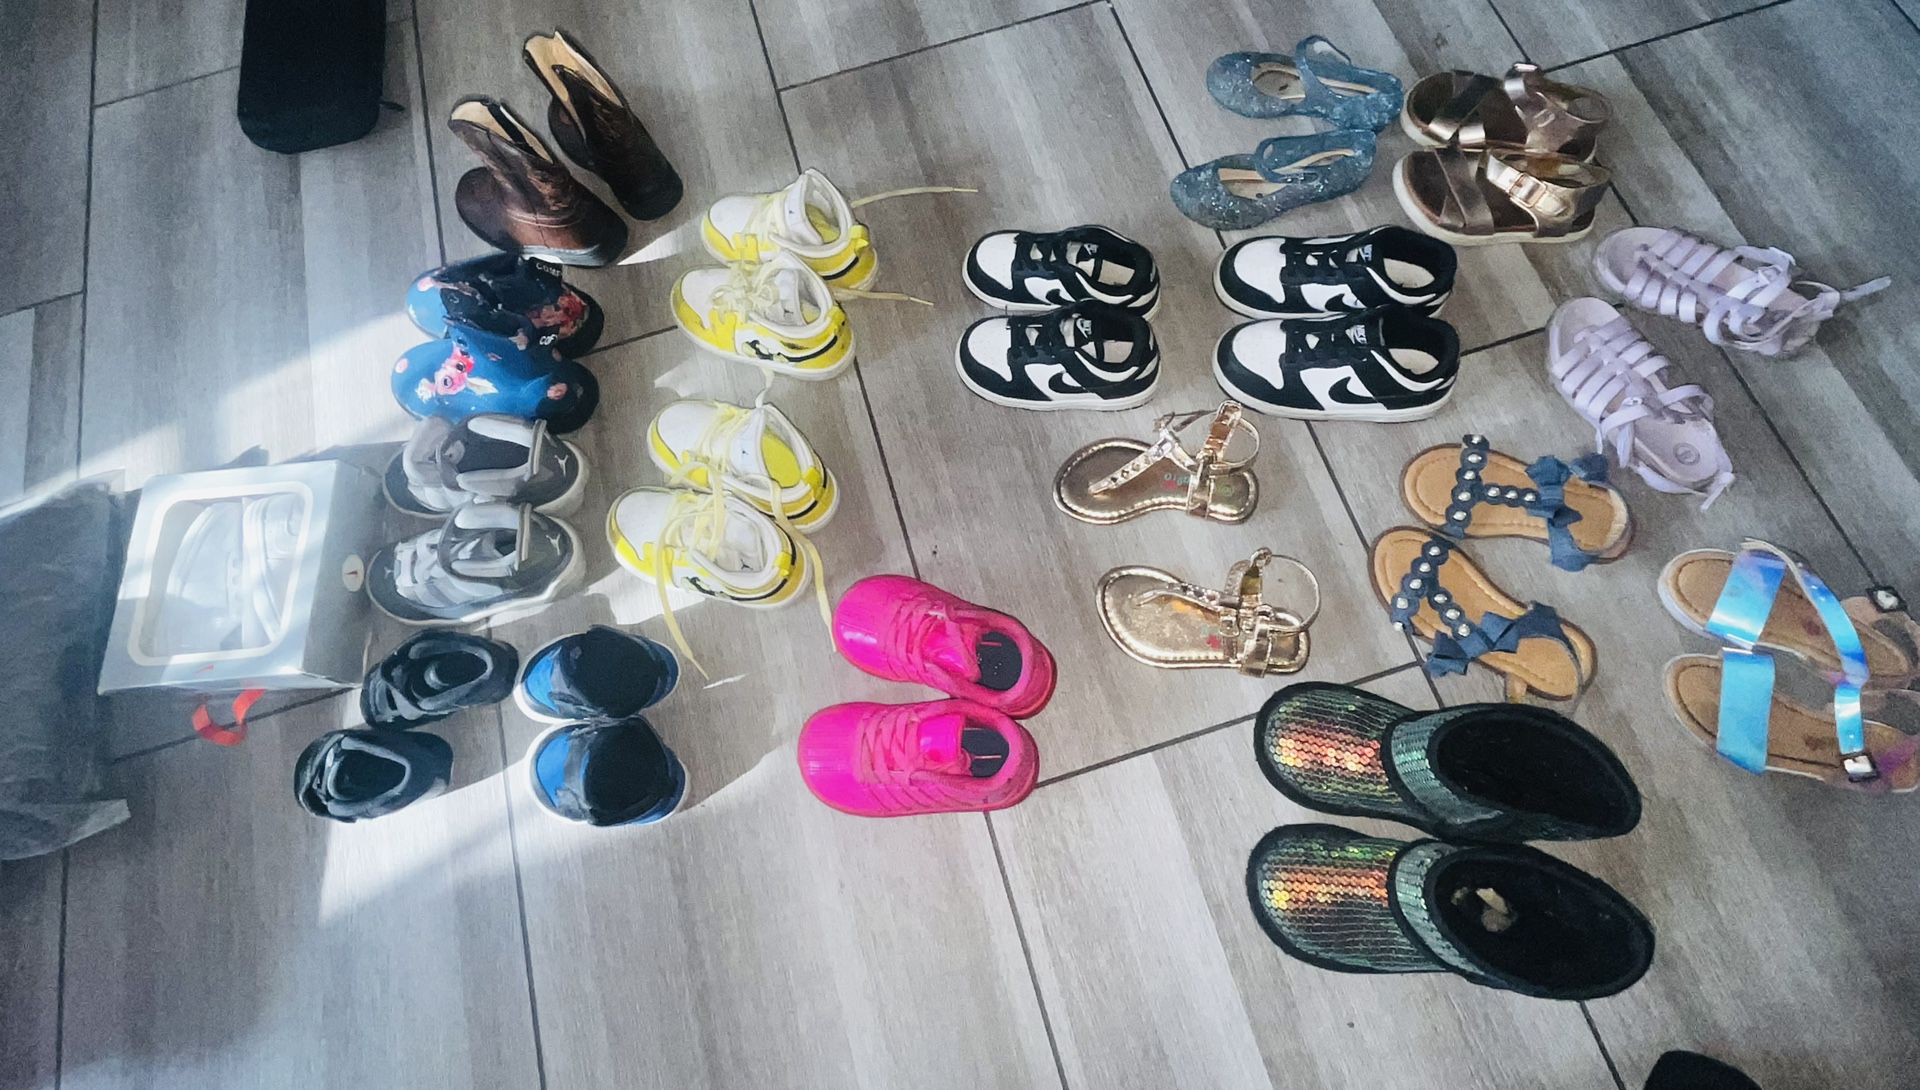 Toddler Shoes - Jordans, Kswiss, Uggs, Pandas, Sandals, Boots